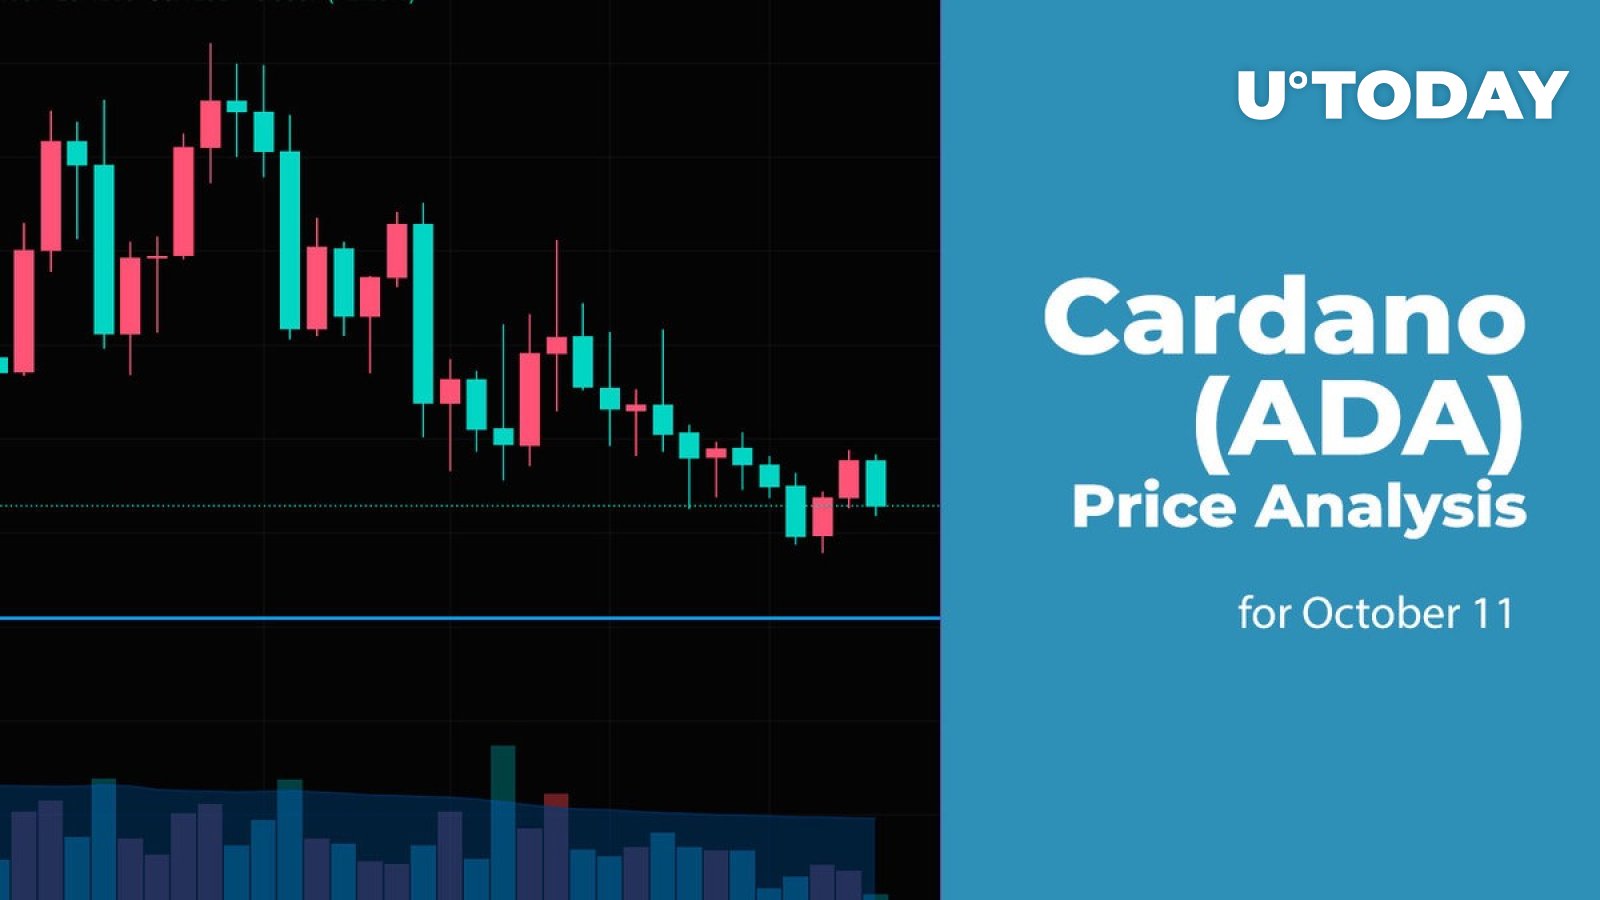 Cardano (ADA) Price Analysis for October 11